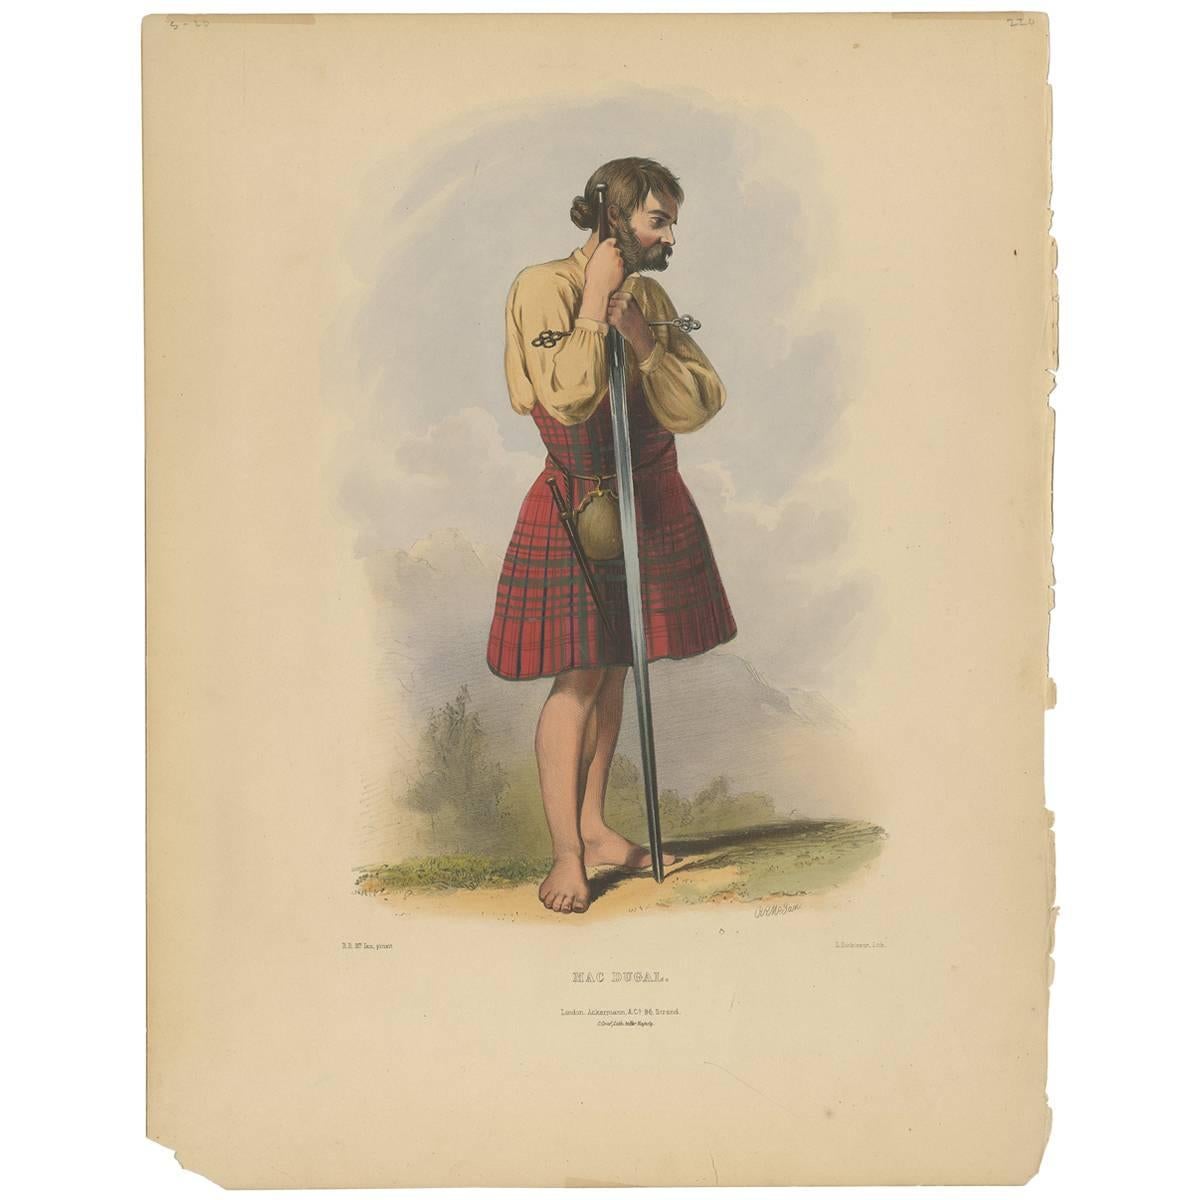 Antique Costume Print 'Mac Dugal' "Scotland" by L. Dickinson, circa 1847